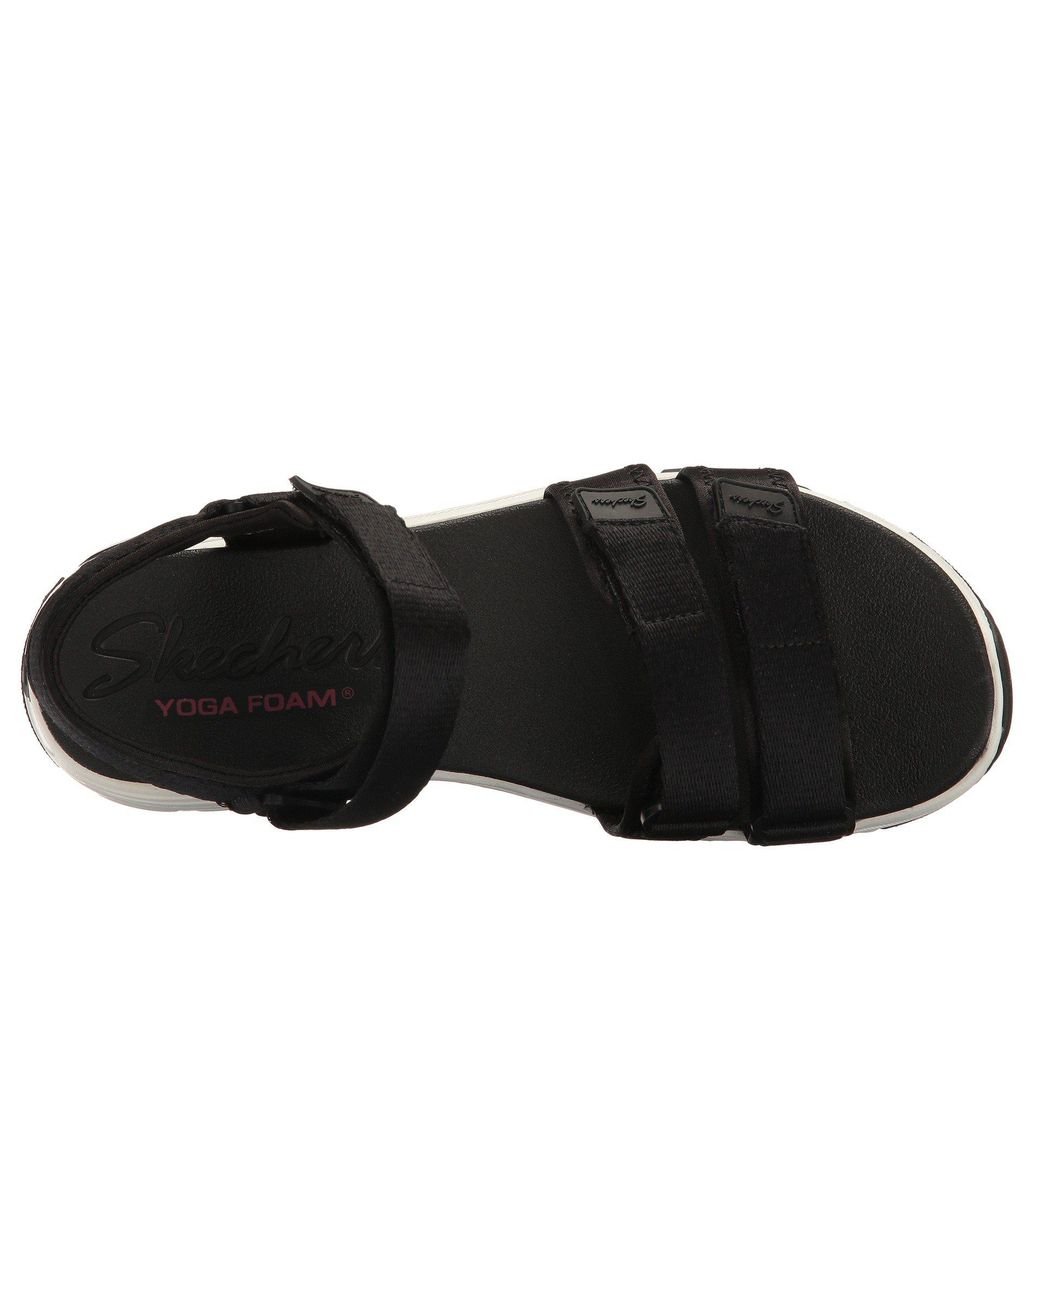 Skechers D'lites-fresh Catch Wedge Black/black Sandal 9 M Us - Save 35% |  Lyst